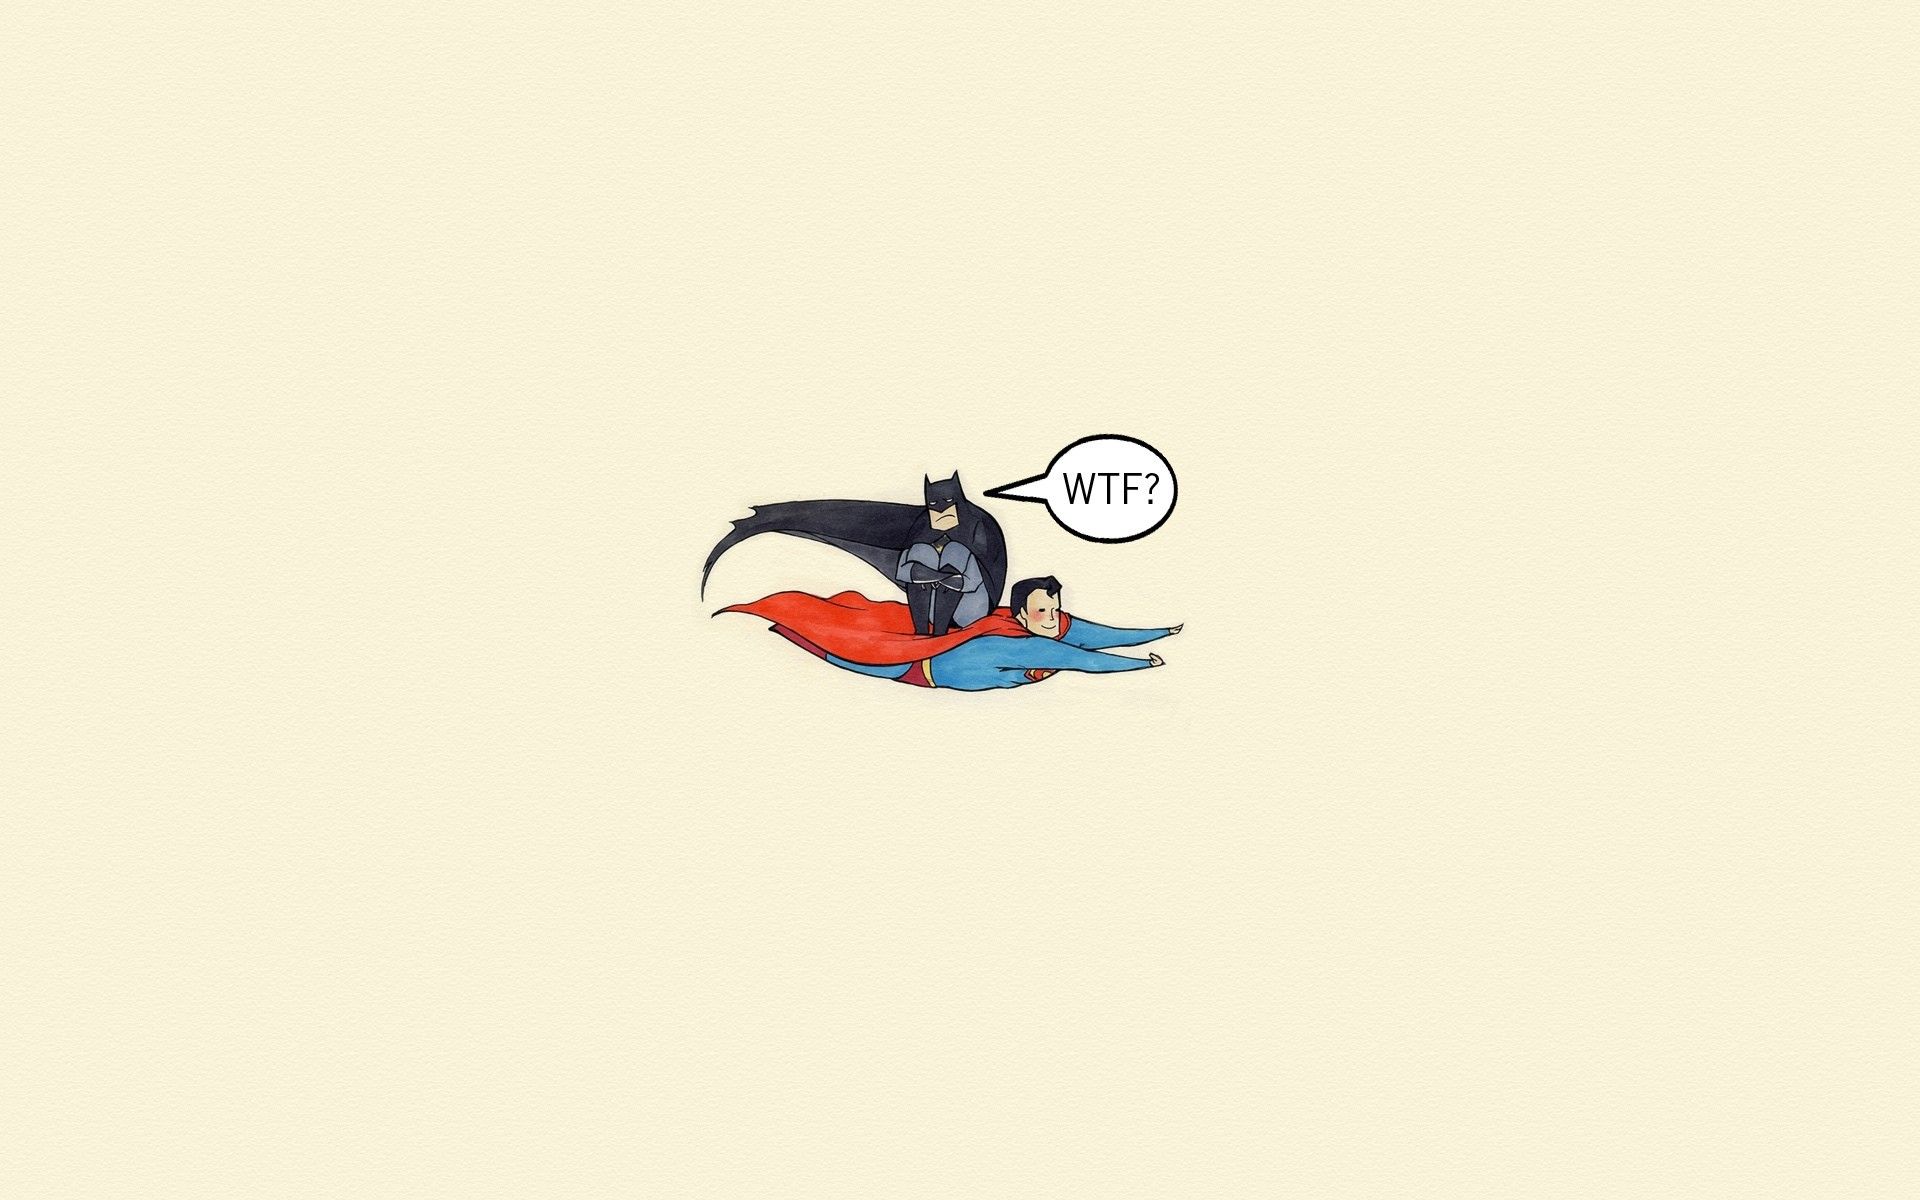 Batman, minimalistic, flying, Superman, humor, WTF, funny wallpaper